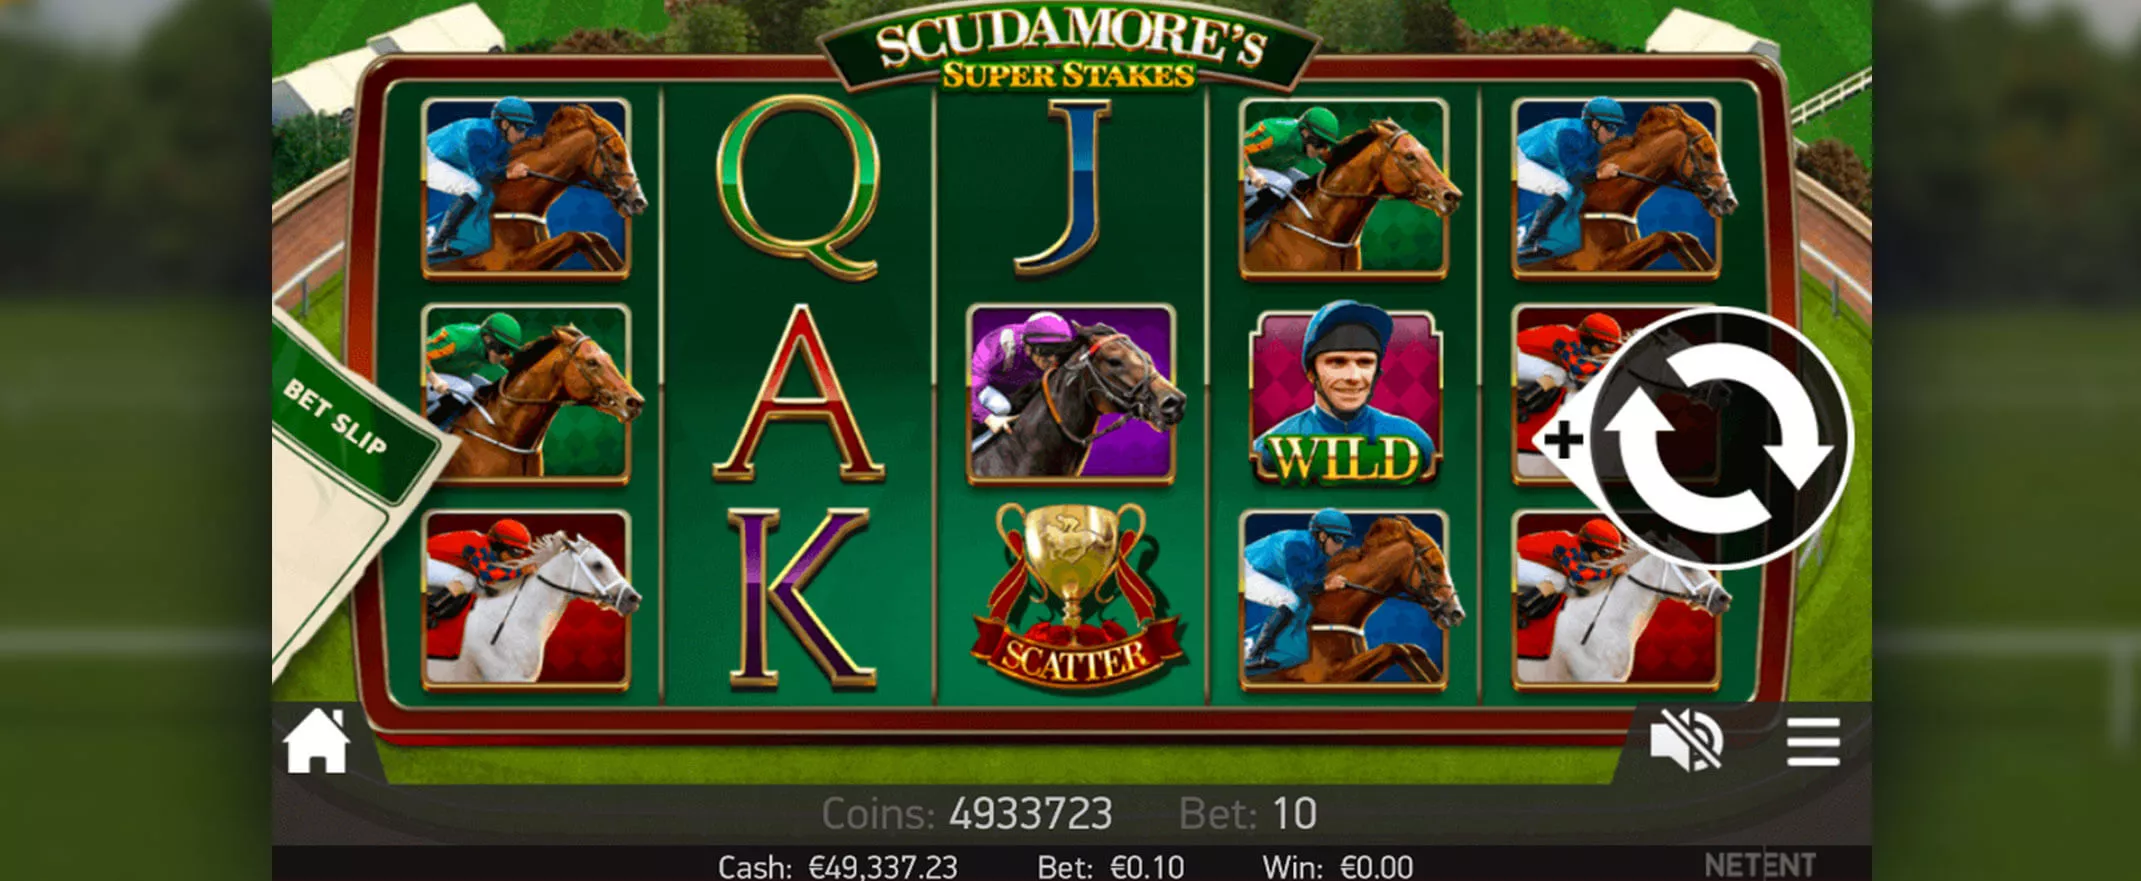 Scudamore's Super Stakes Slot Screenshot